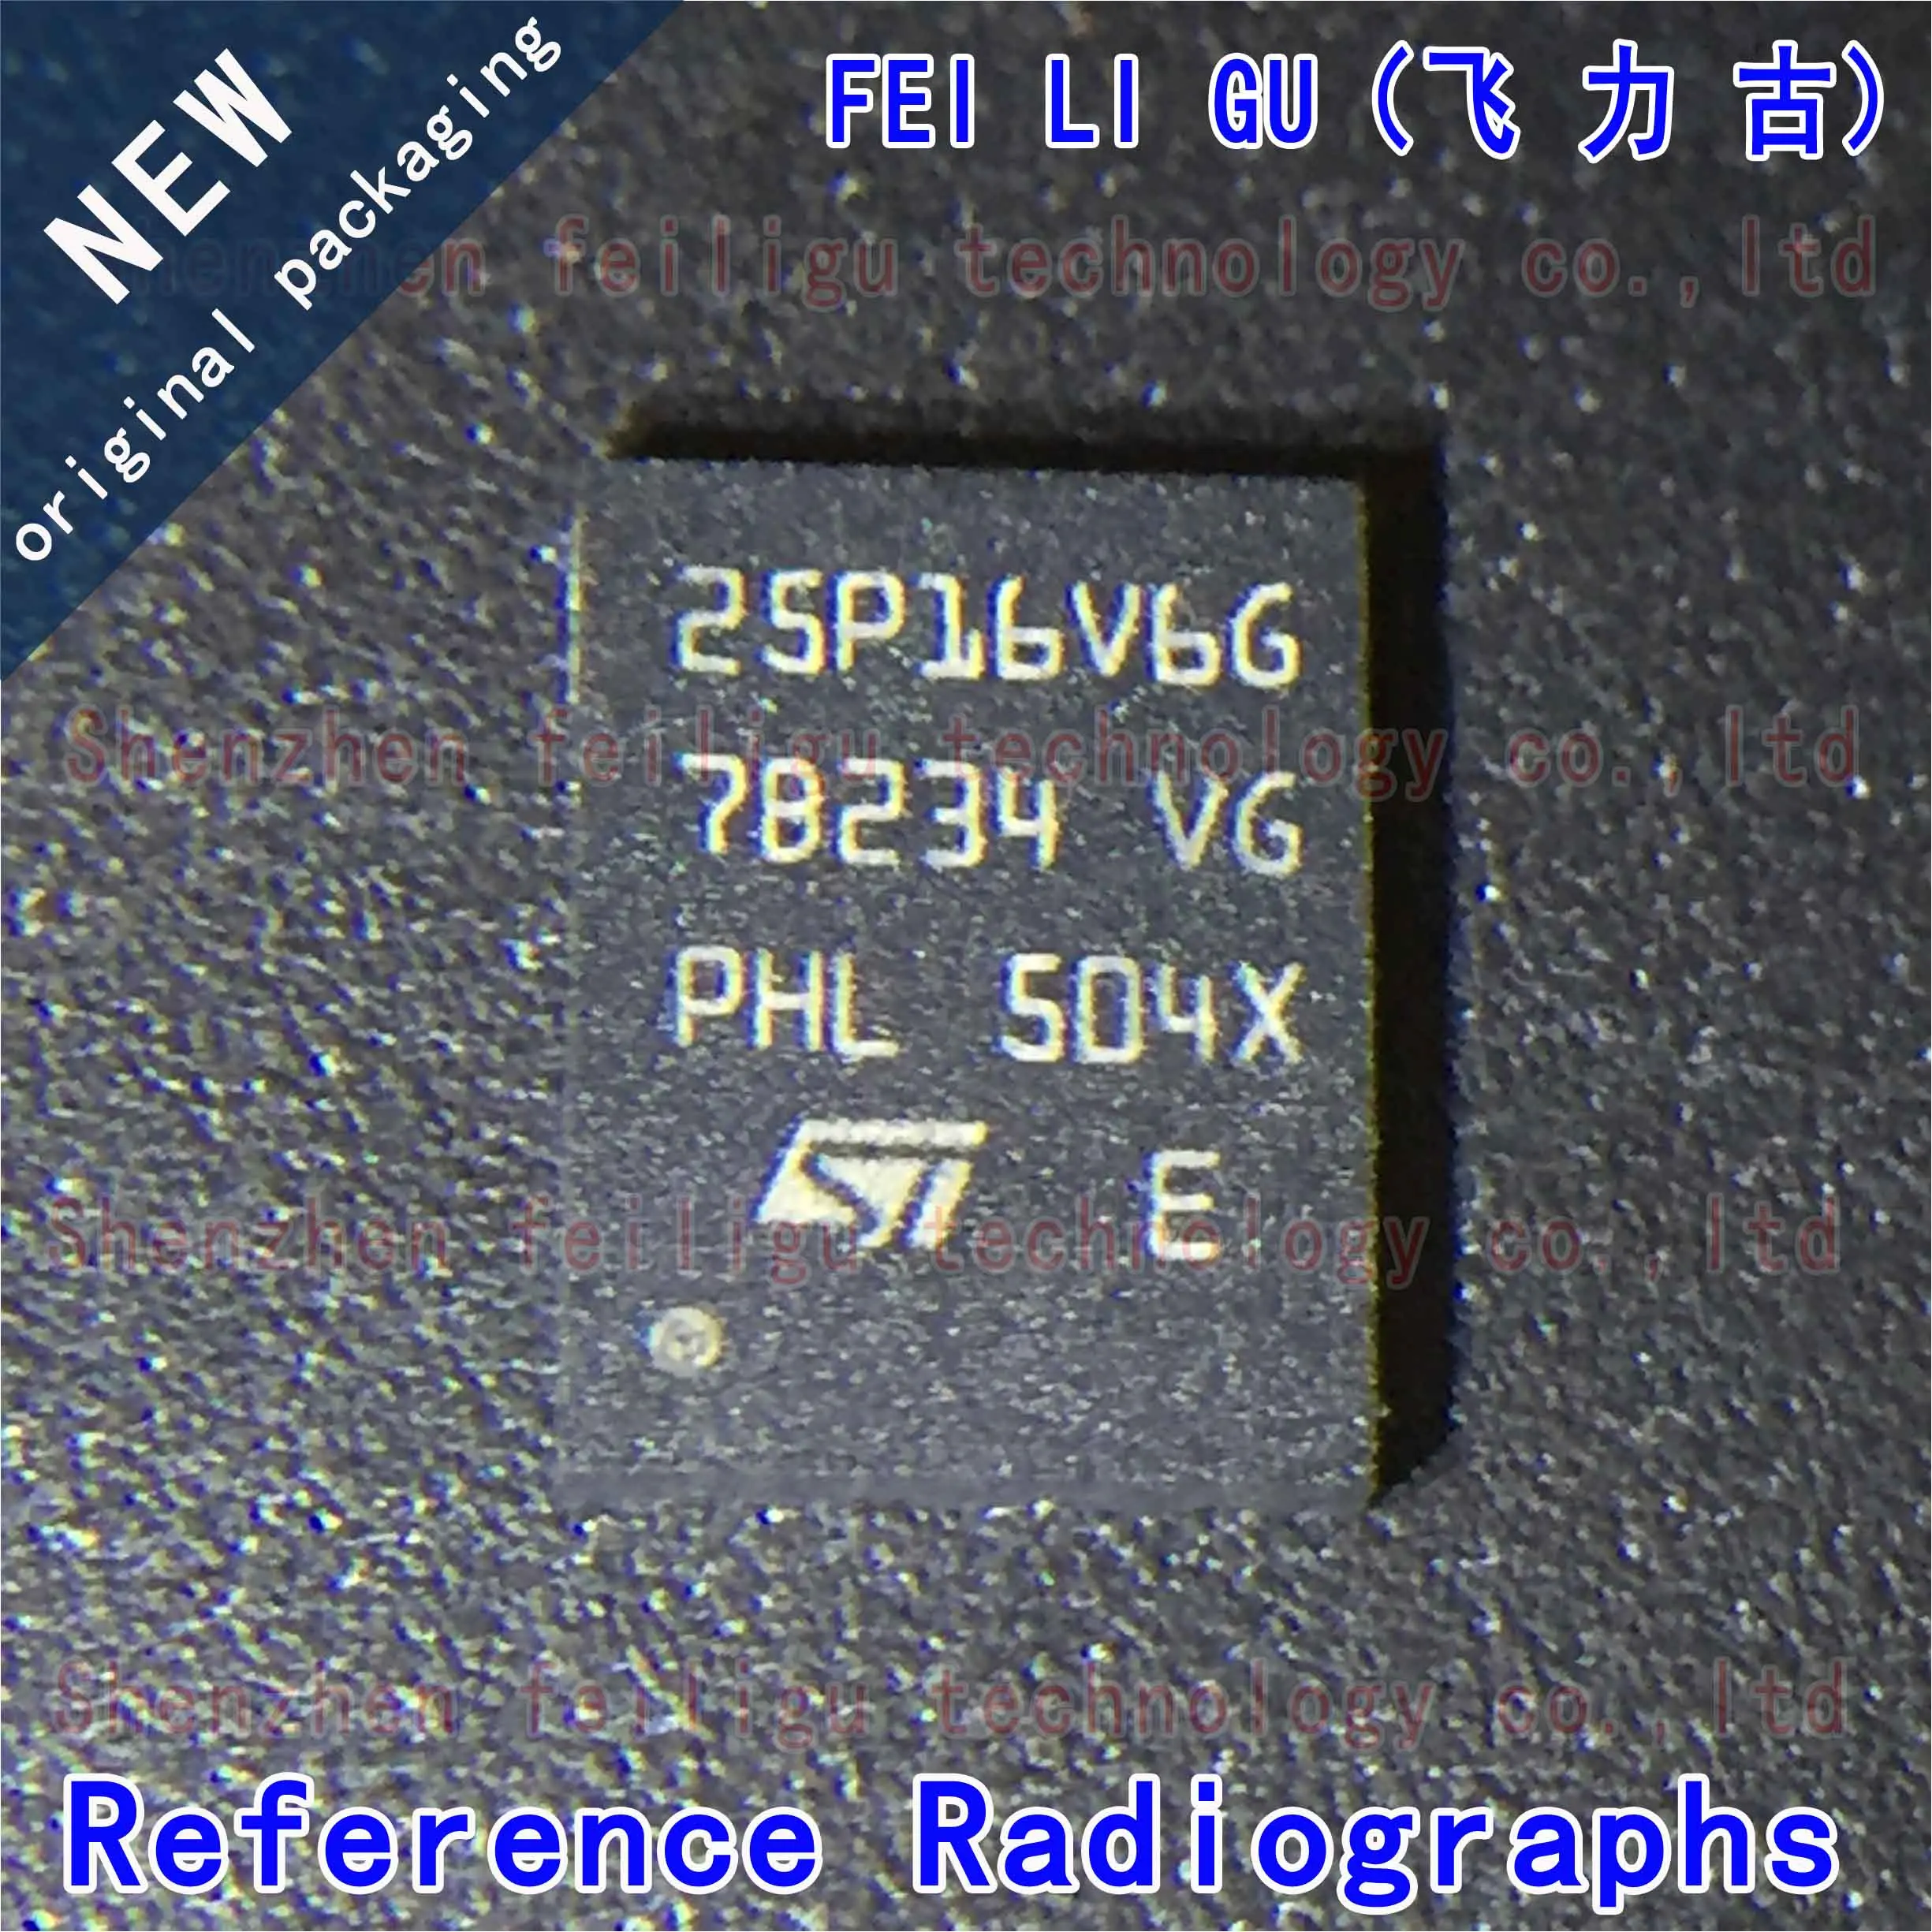 1PCS 100% New original M25P16-VME6TG M25P16-VME6G Silkscreen:25P16V6G Package:VDFPN8 FLASH-NOR 16Mb Memory Chip 1pcs 100% new original a1101eua t a1101eua a1101 silkscreen 101 package to 92 inline hall effect single pole switch sensor chip